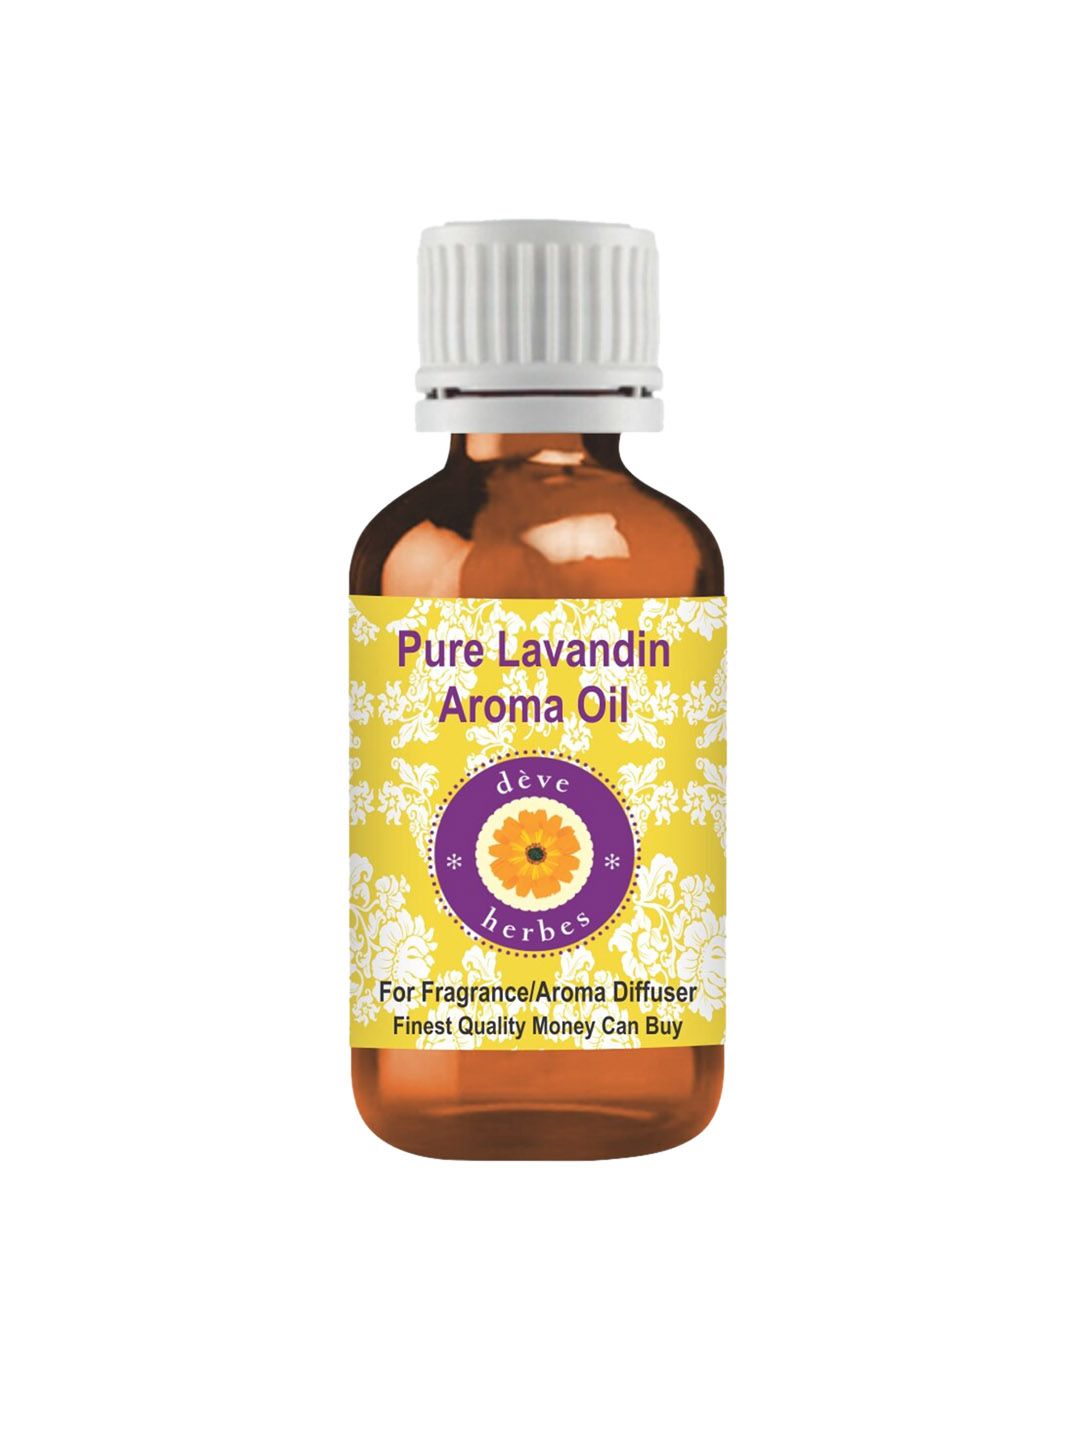 Deve Herbes Pure Lavandin Aroma Oil 50ml Price in India